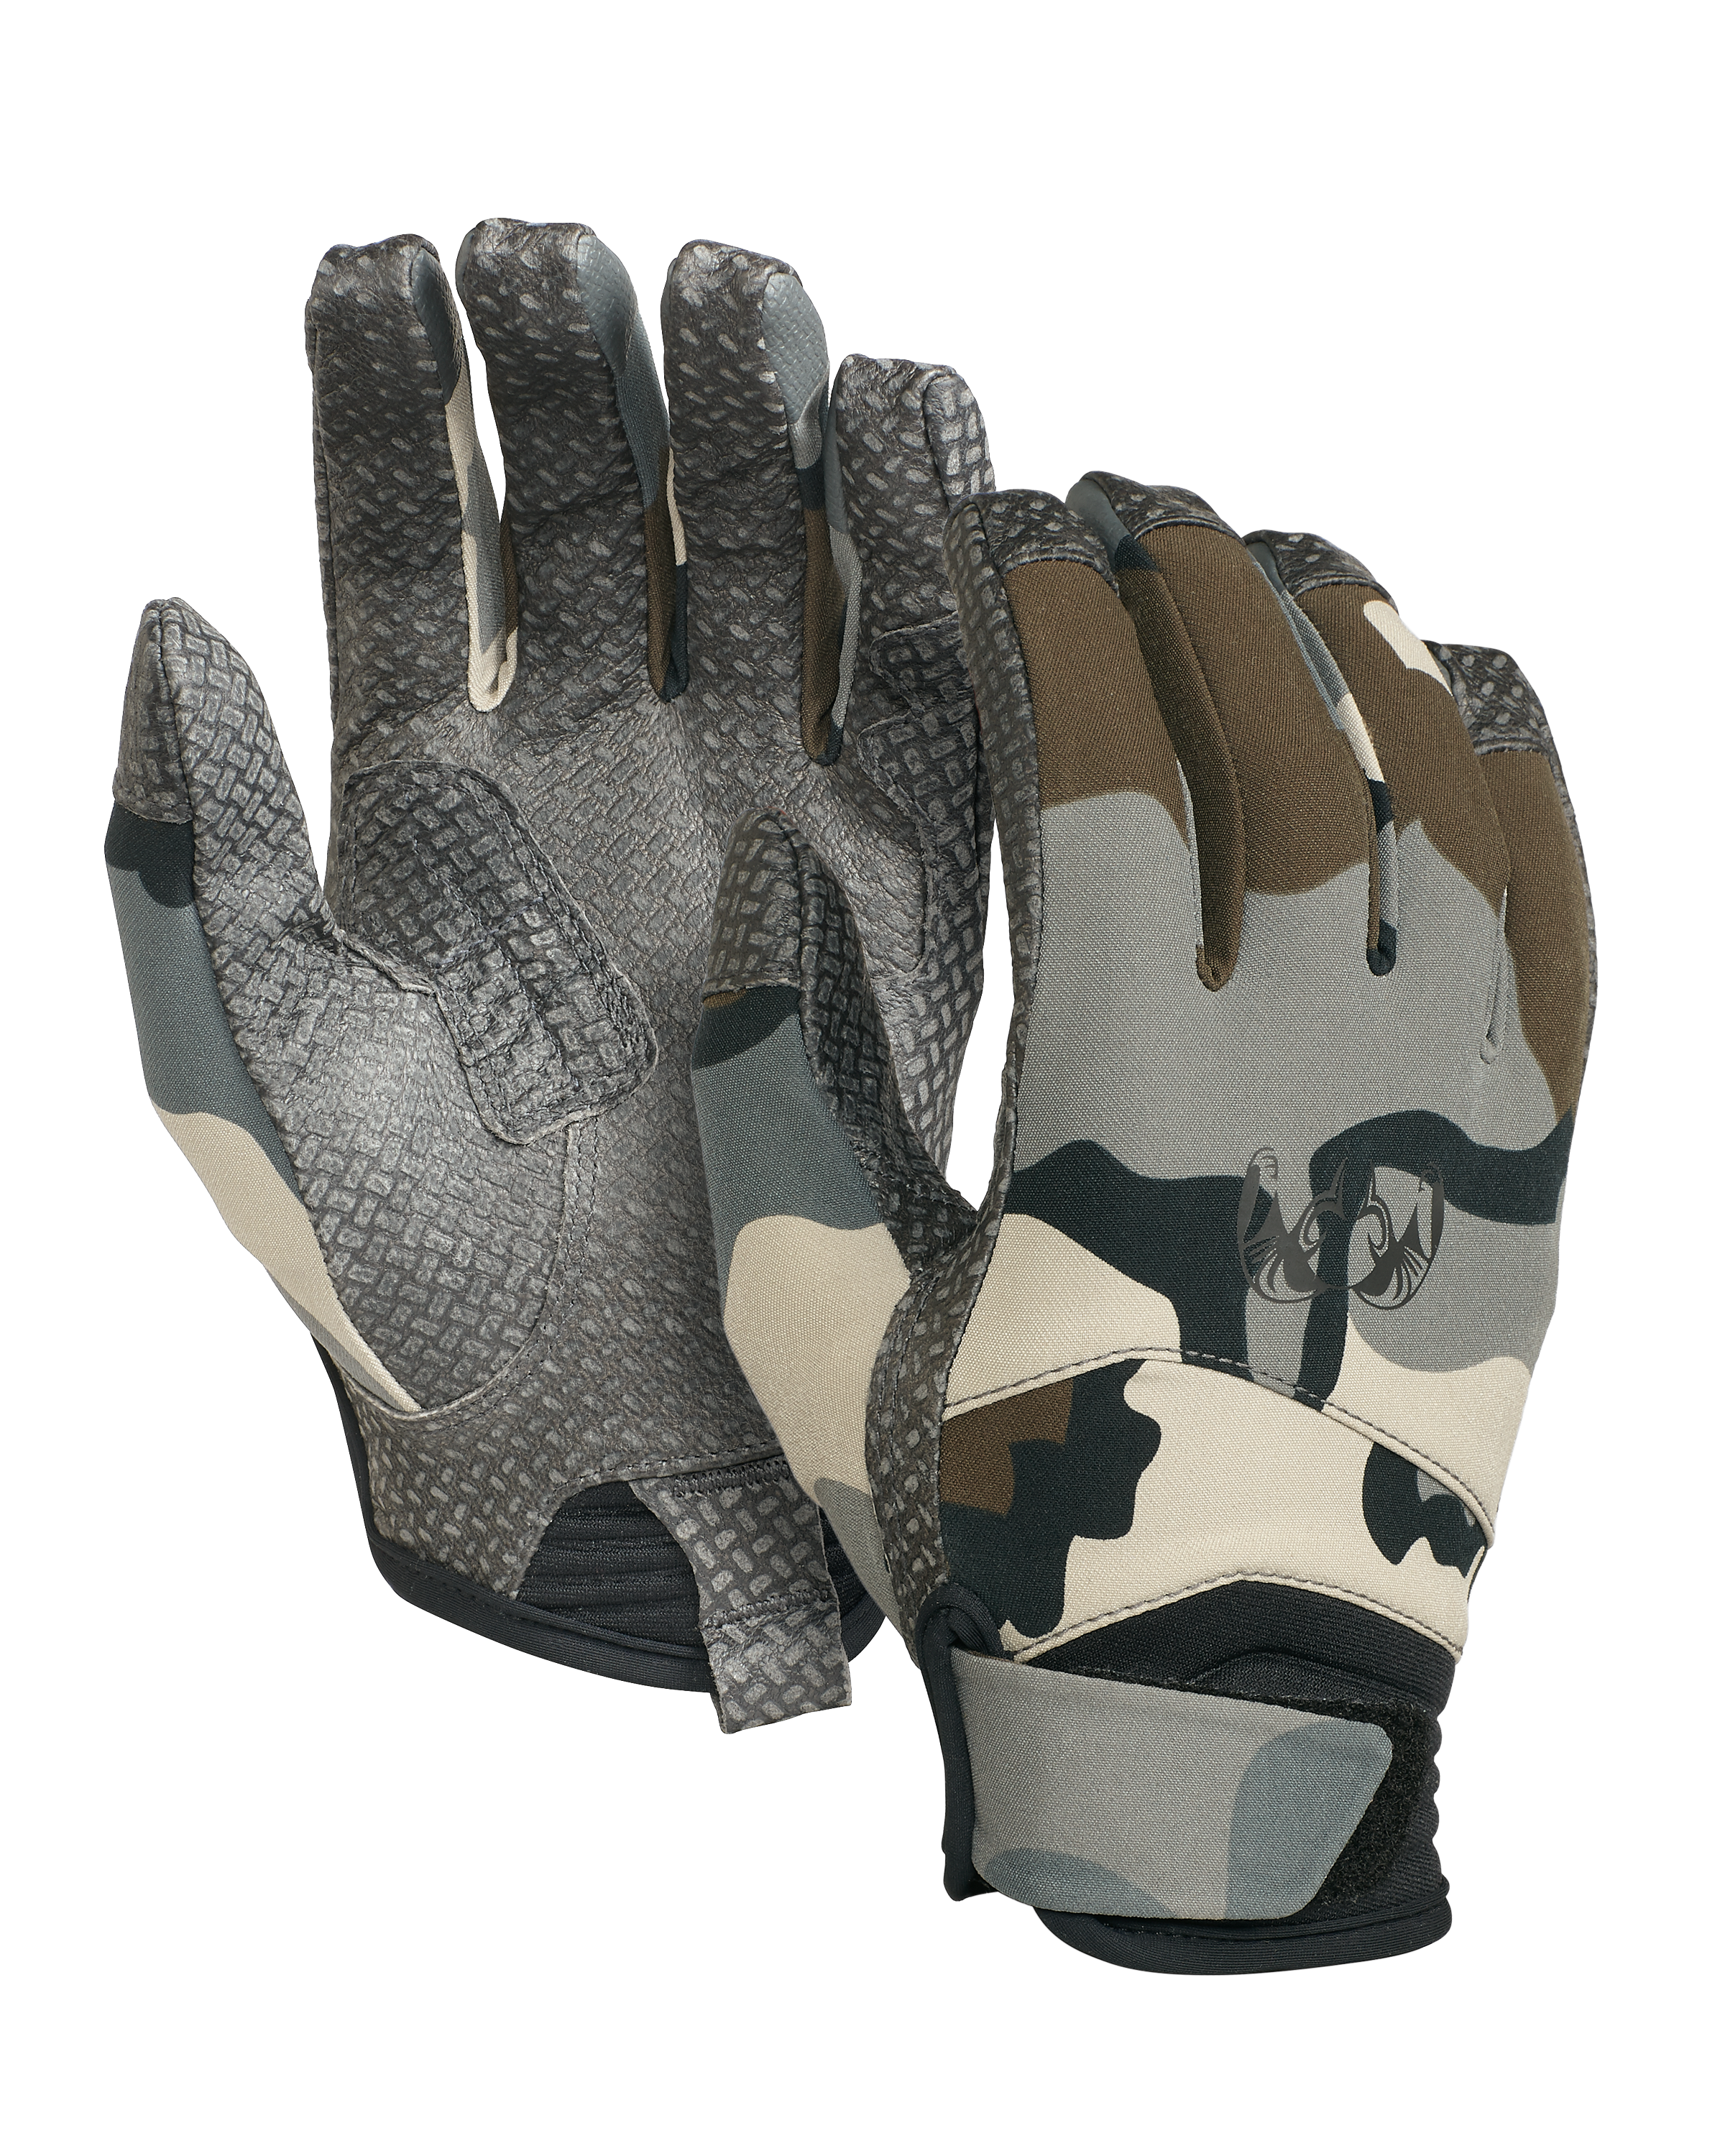 KUIU Attack Hunting Glove in Vias | Size Medium